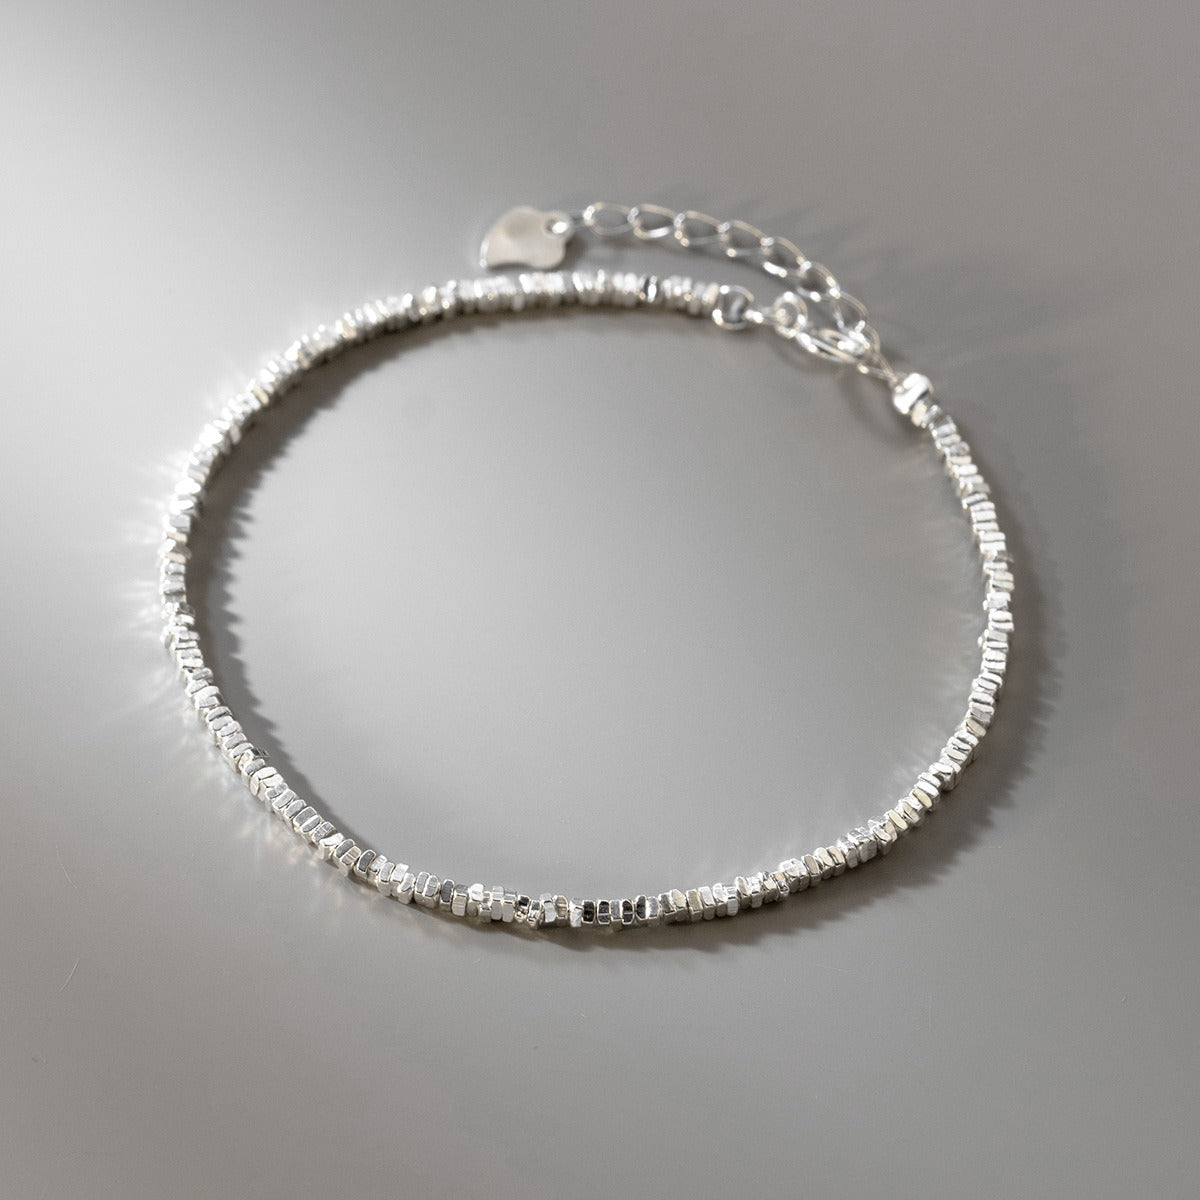 S925 sterling silver irregular broken silver simple bracelet